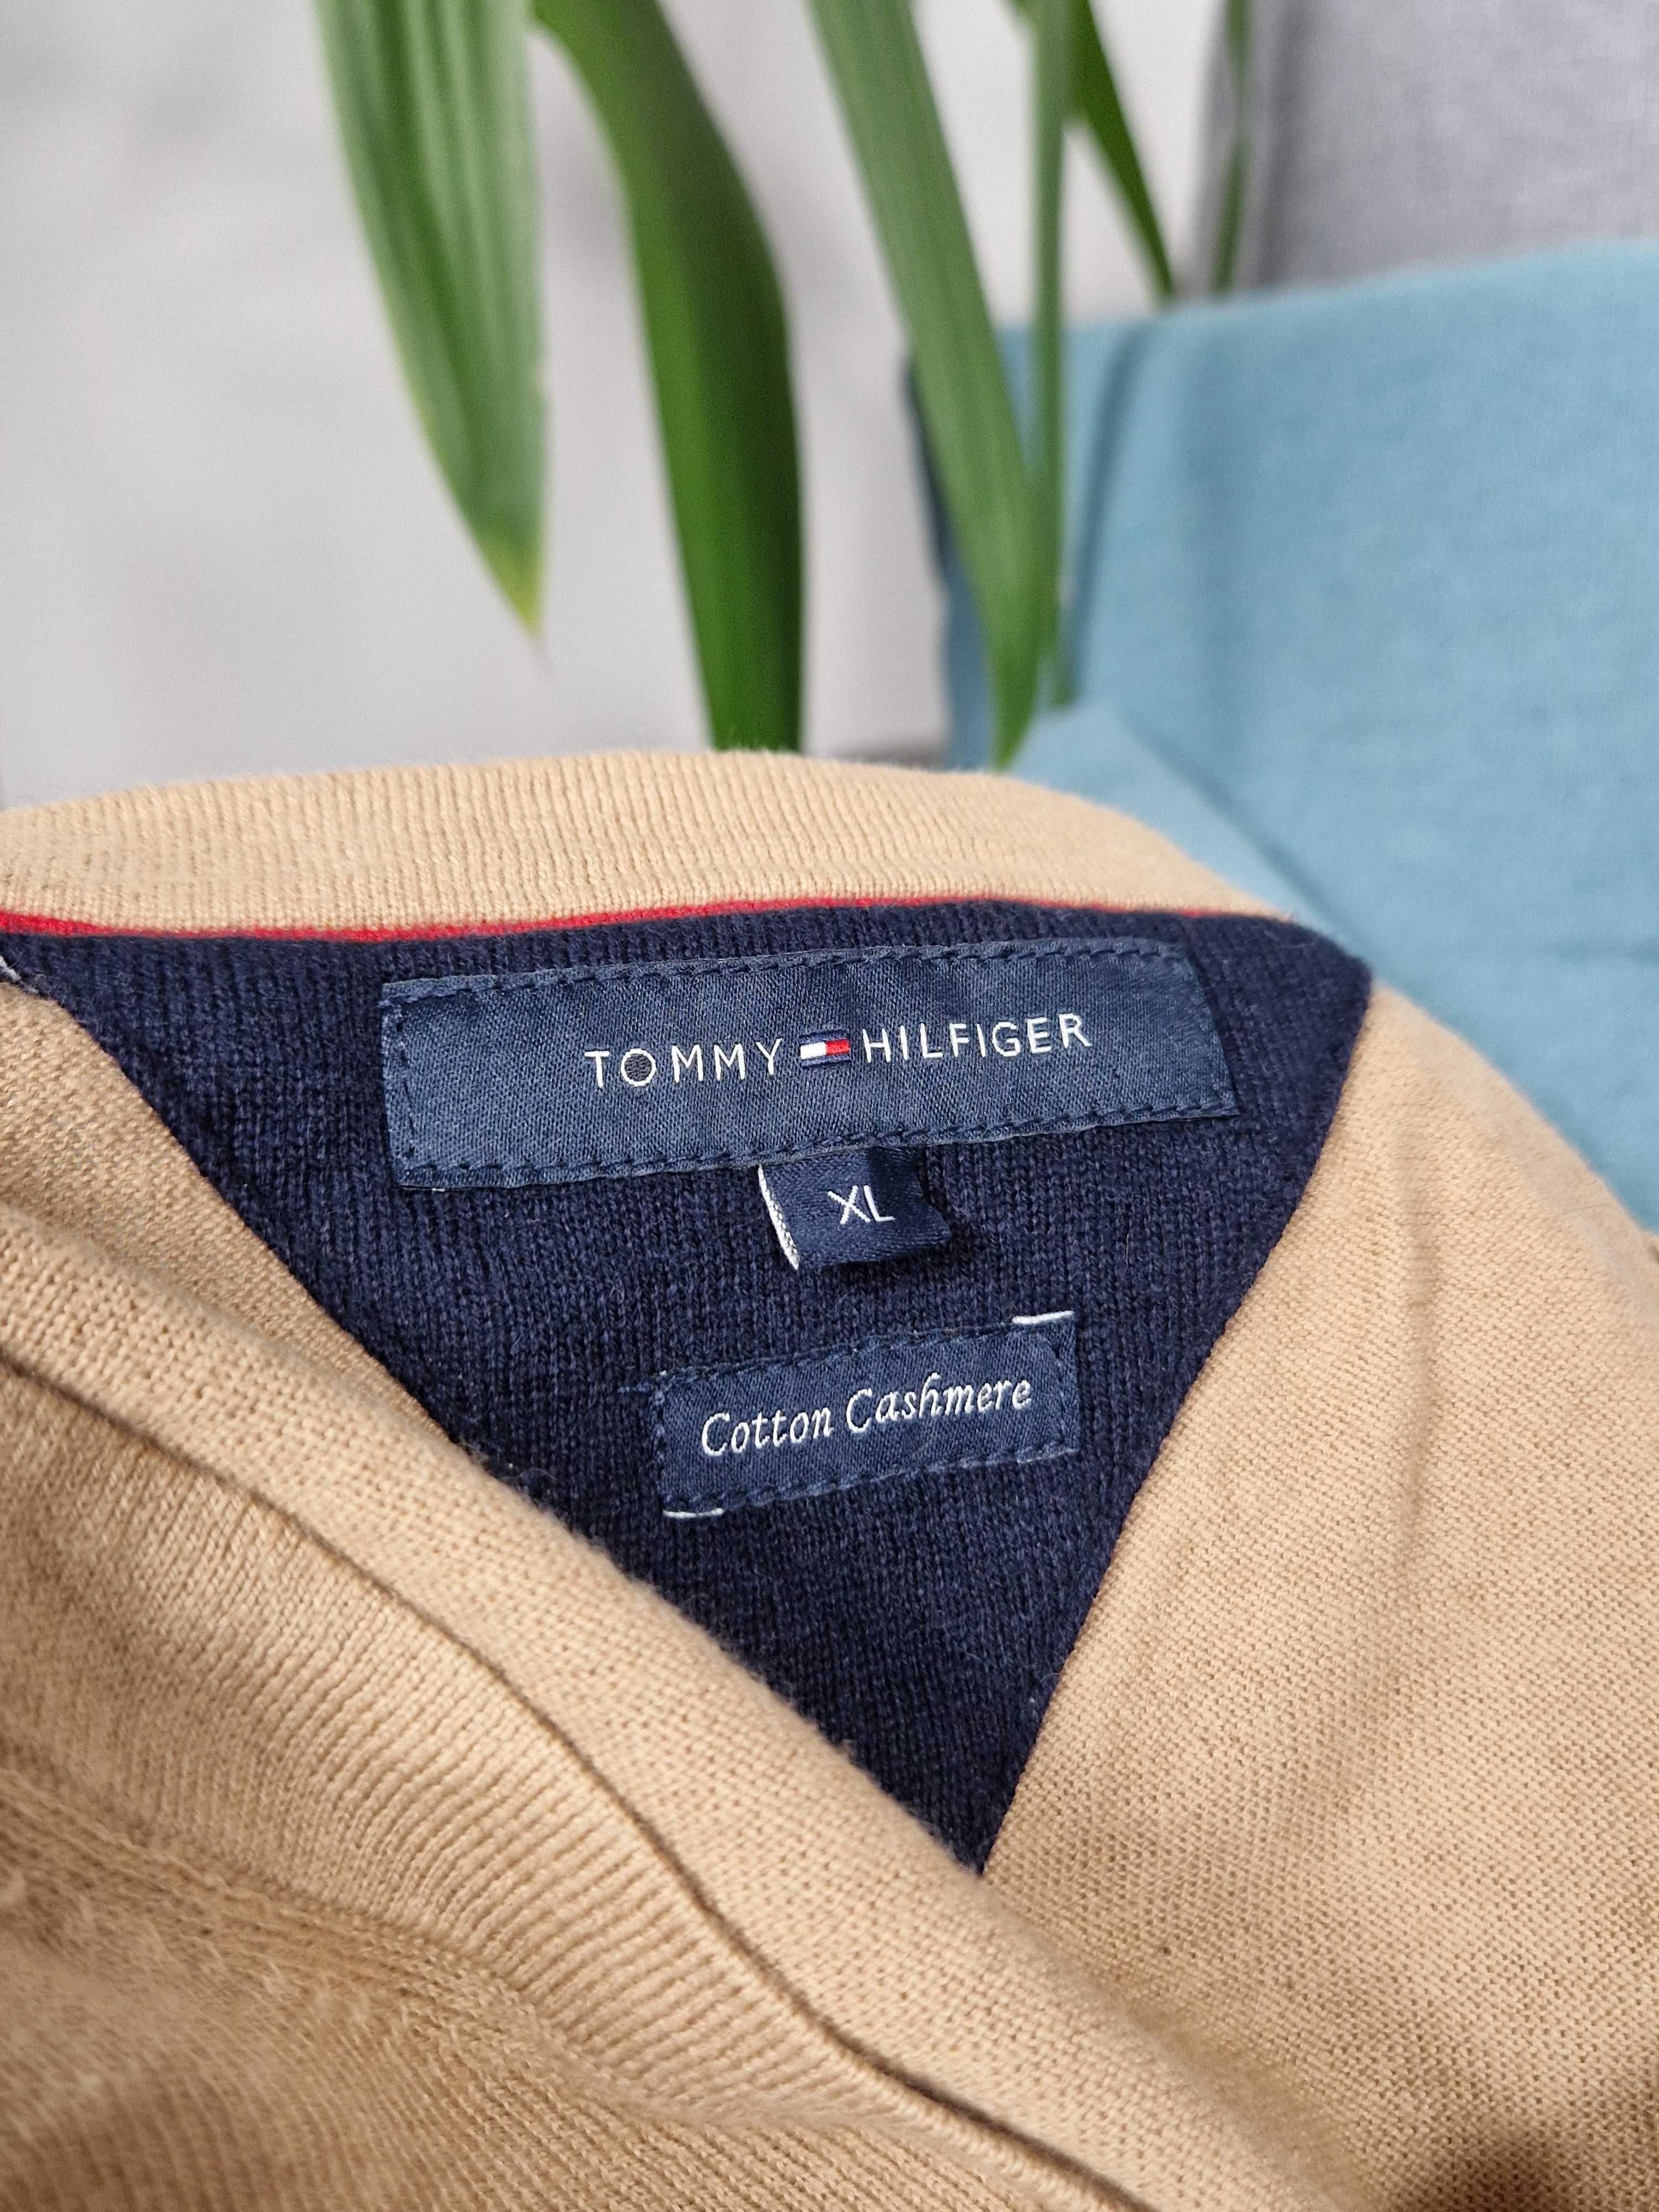 Tommy Hilfiger TH v-neck sweter męski cienki elegancki kaszmir XL